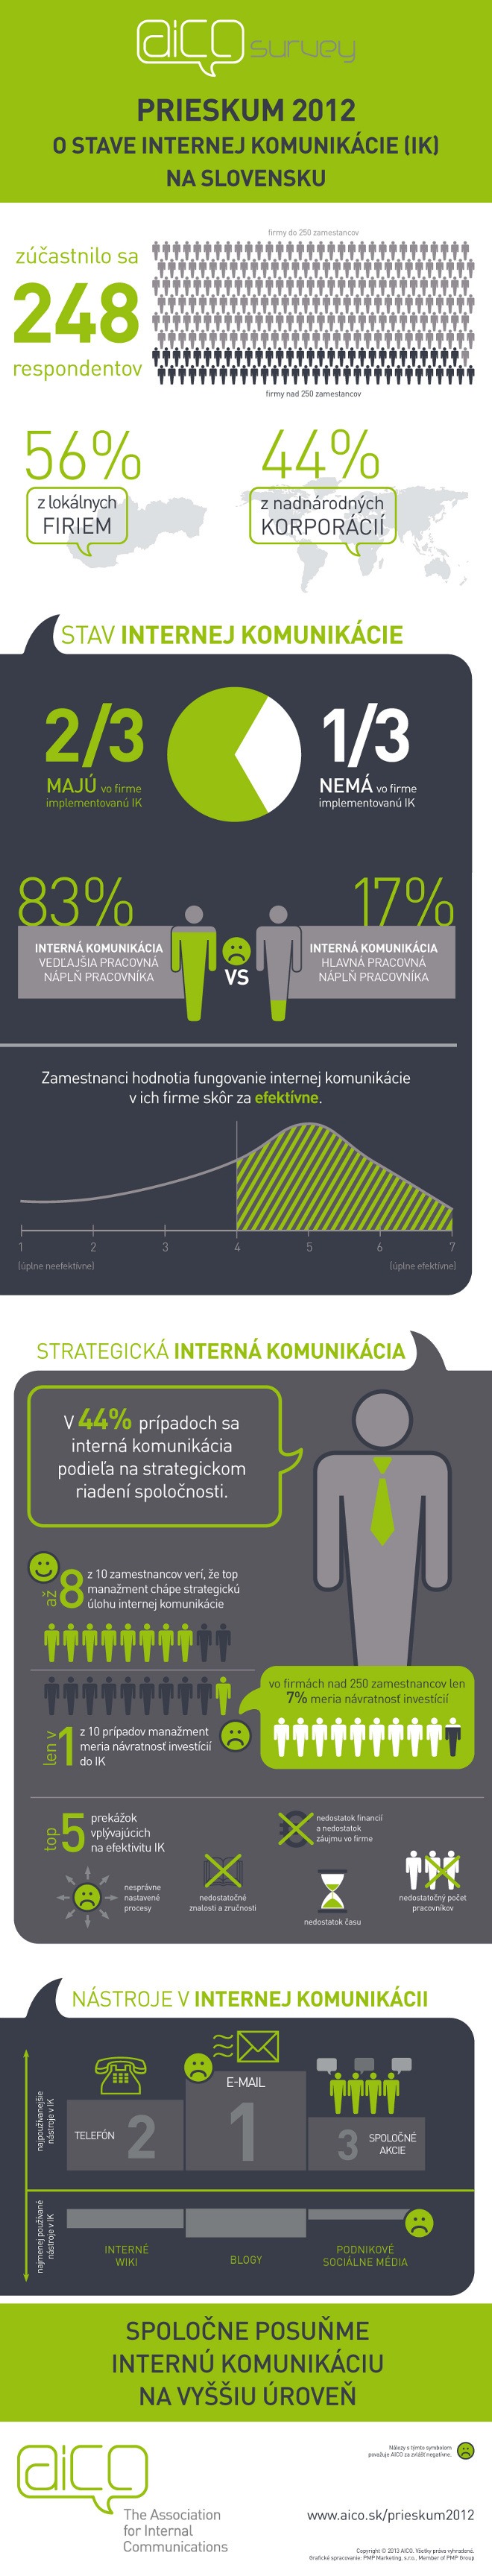 Infografika IK - AICO.